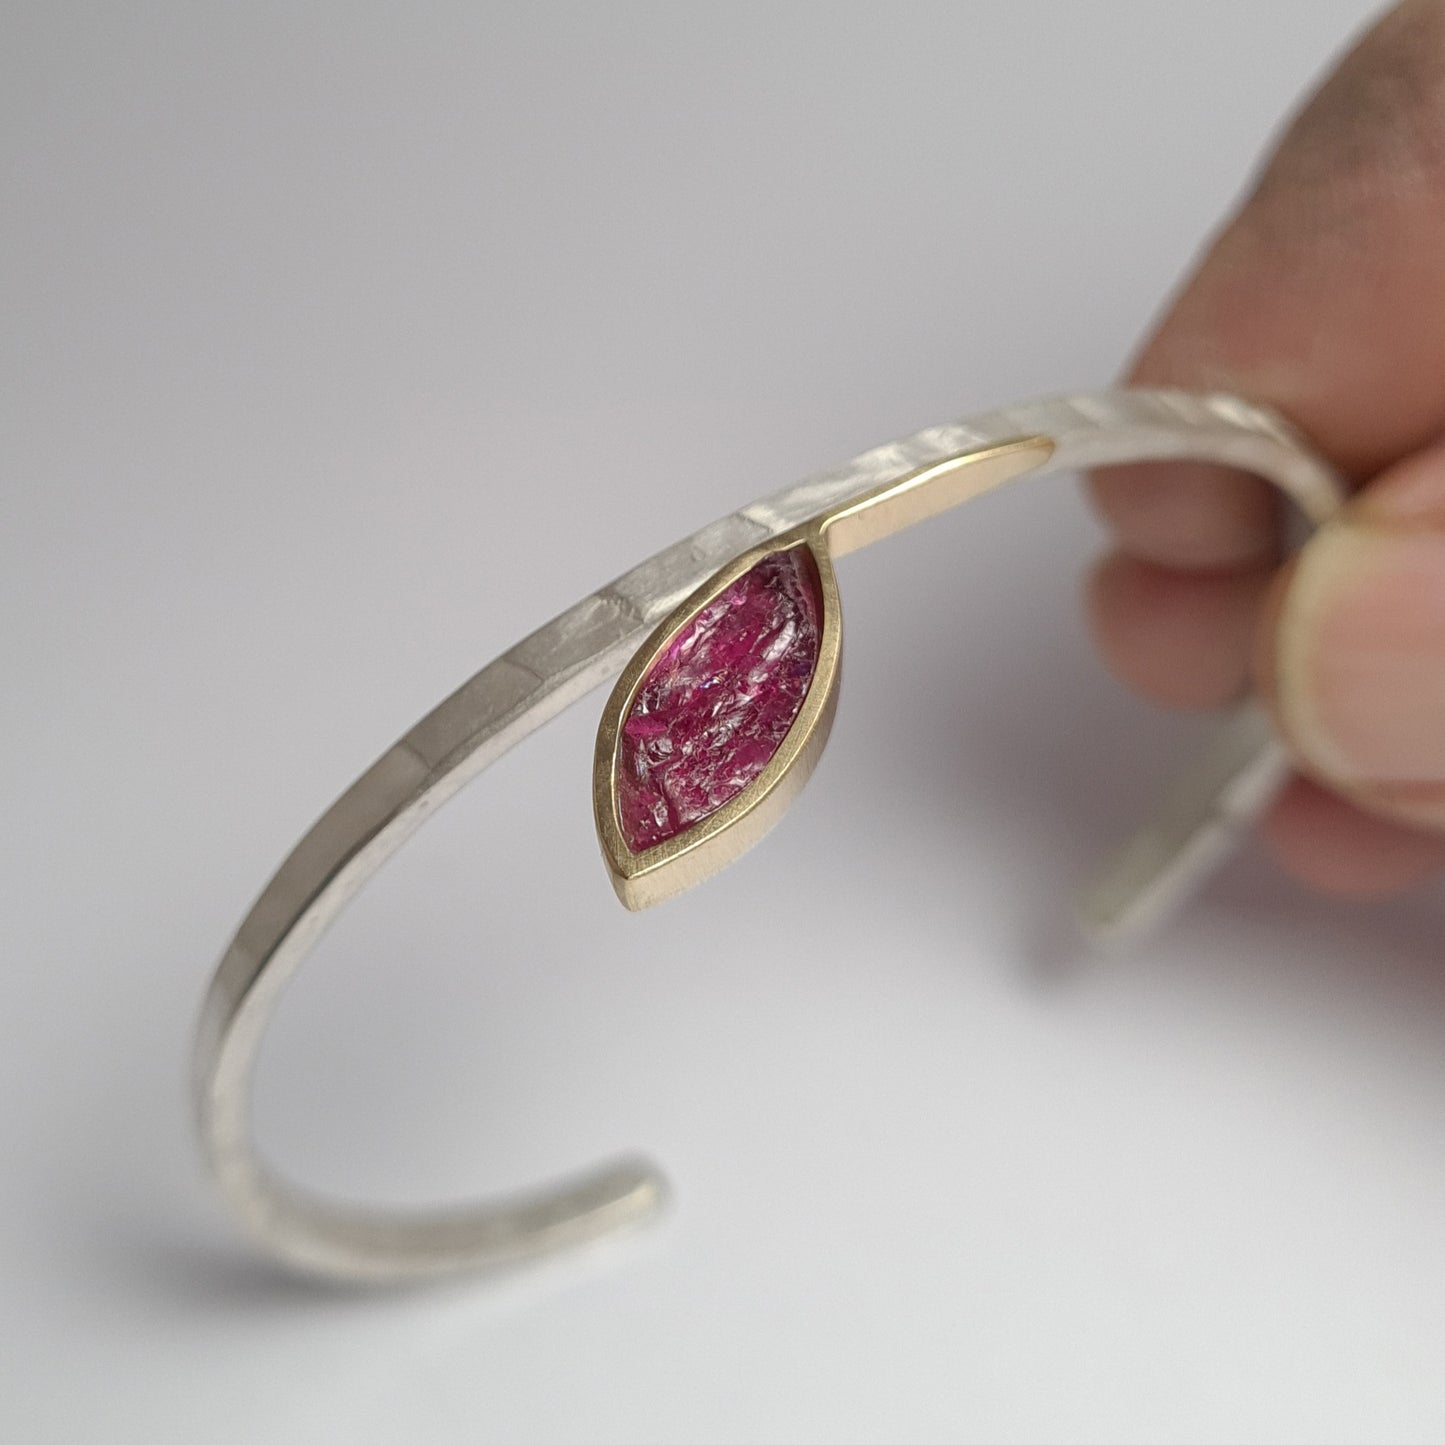 ForJa bracelet with pink tourmaline. B